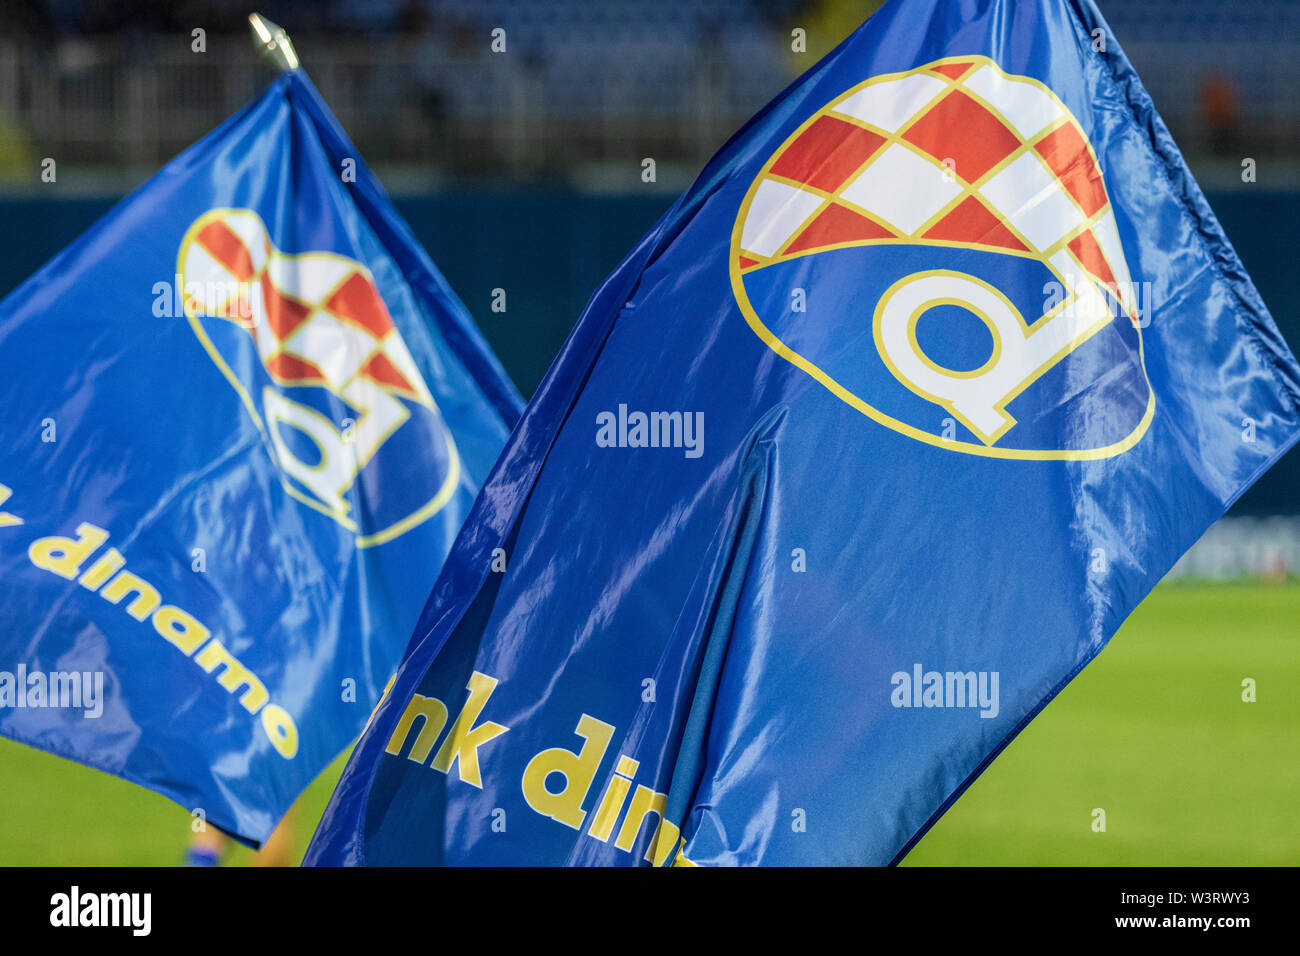 GNK Dinamo vs. HNK Rijeka - License, download or print for £2.48, Photos